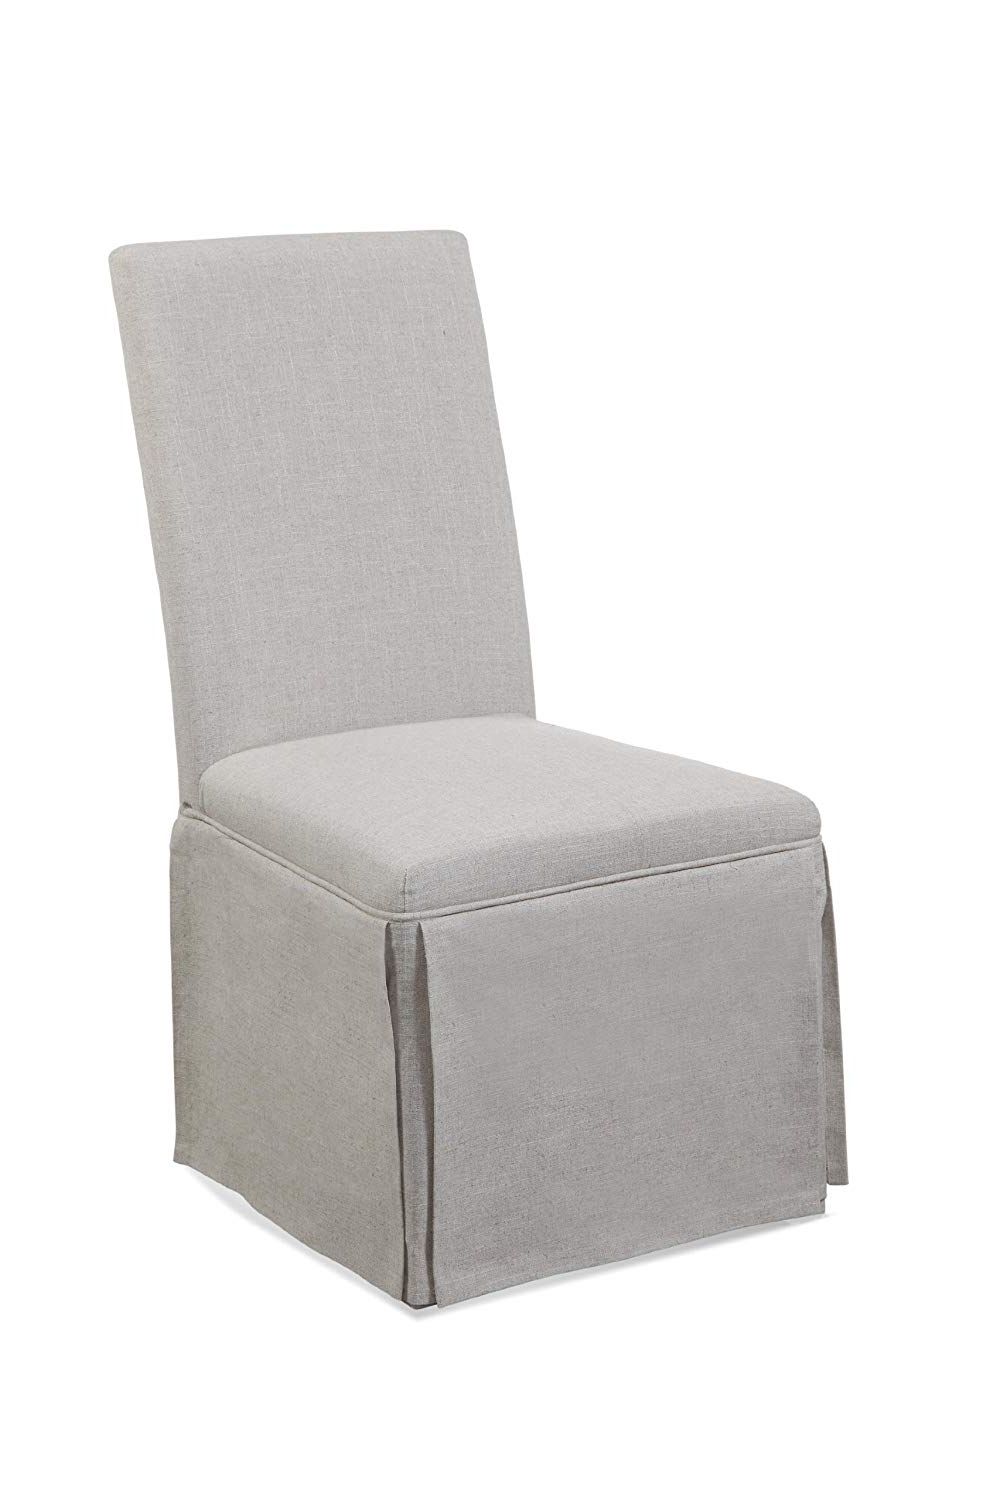 Latest Garten Linen Skirted Side Chairs Set Of 2 In Amazon – 39 In. Skirted Parsons Chair – Set Of 2 – Chairs (Photo 4 of 20)